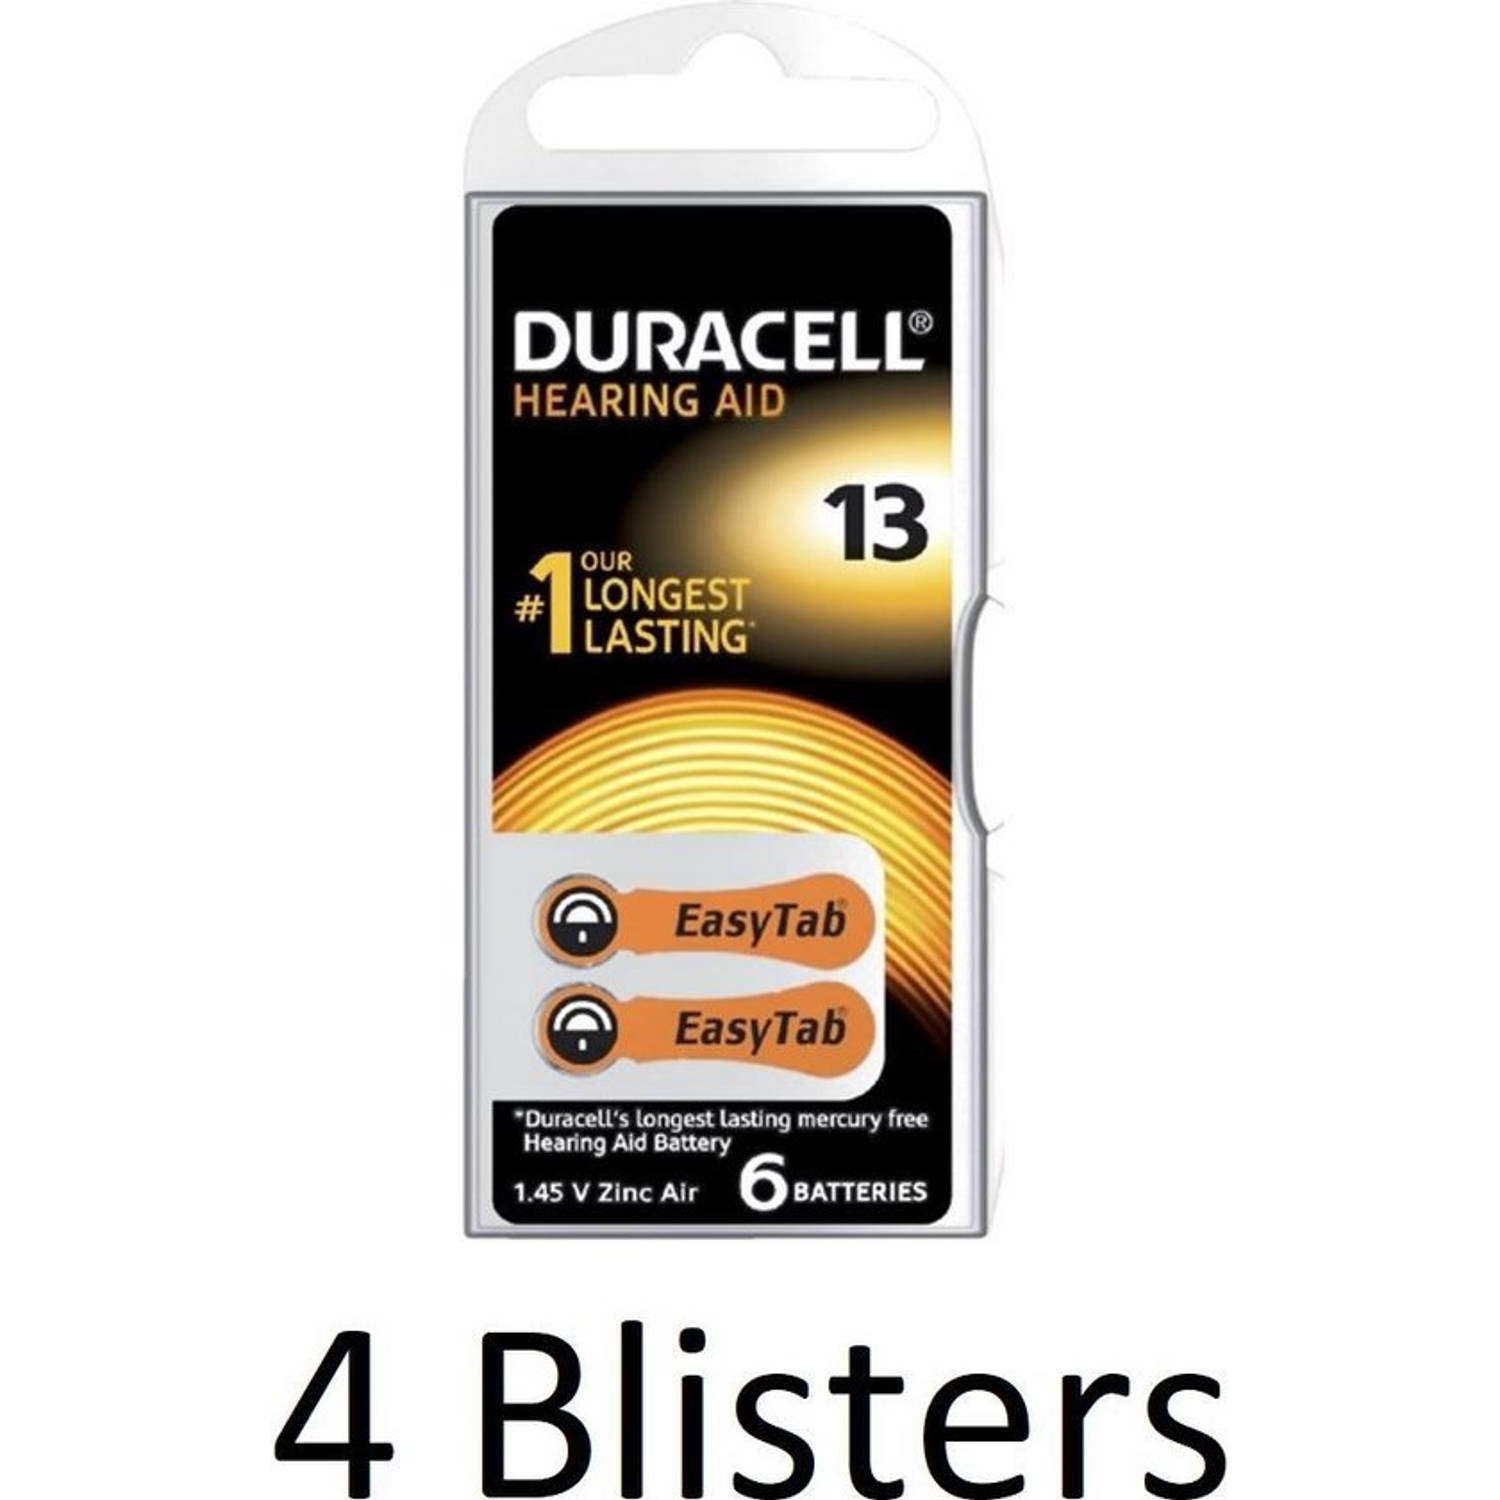 24 Stuks (4 Blisters a 6 st) duracell Batterij da13 hearing aid